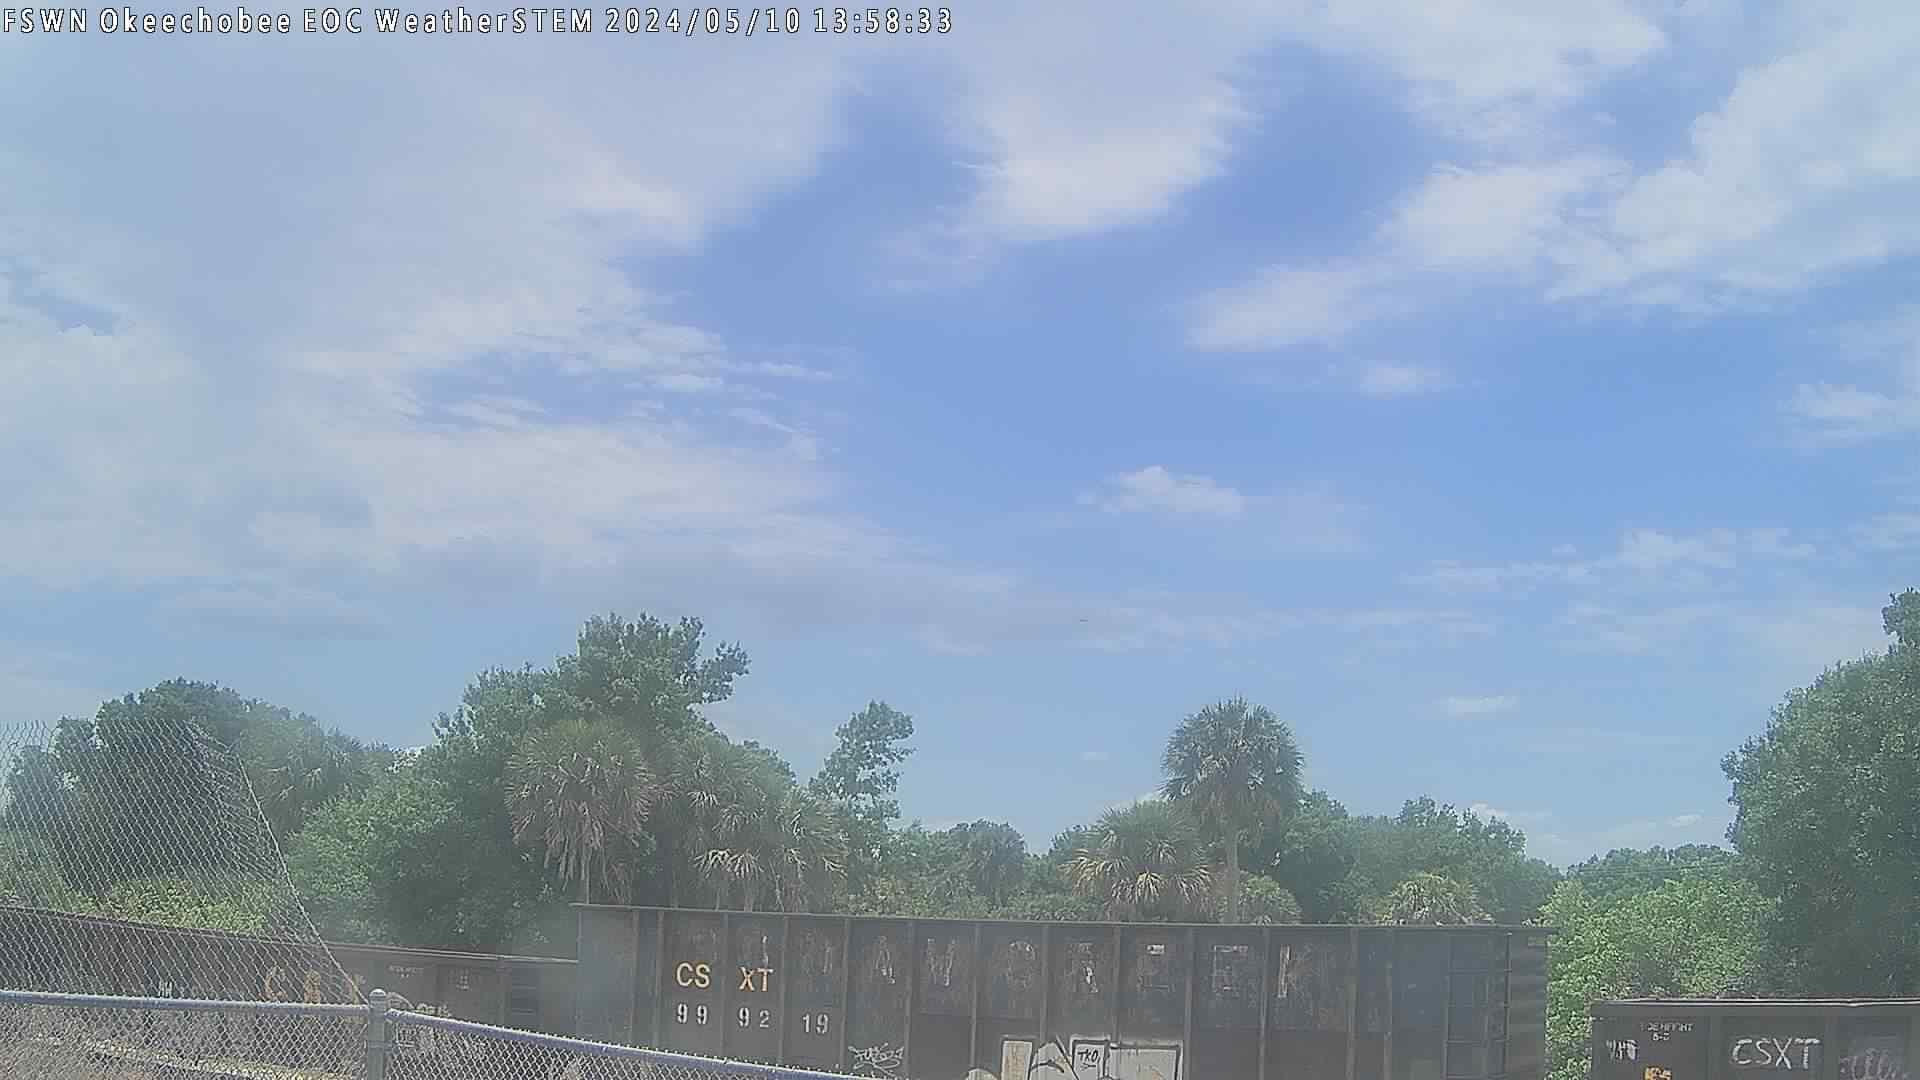  WeatherSTEM Cloud Camera FSWNLock7 in Okeechobee County, Florida FL at FSWN Okeechobee EOC